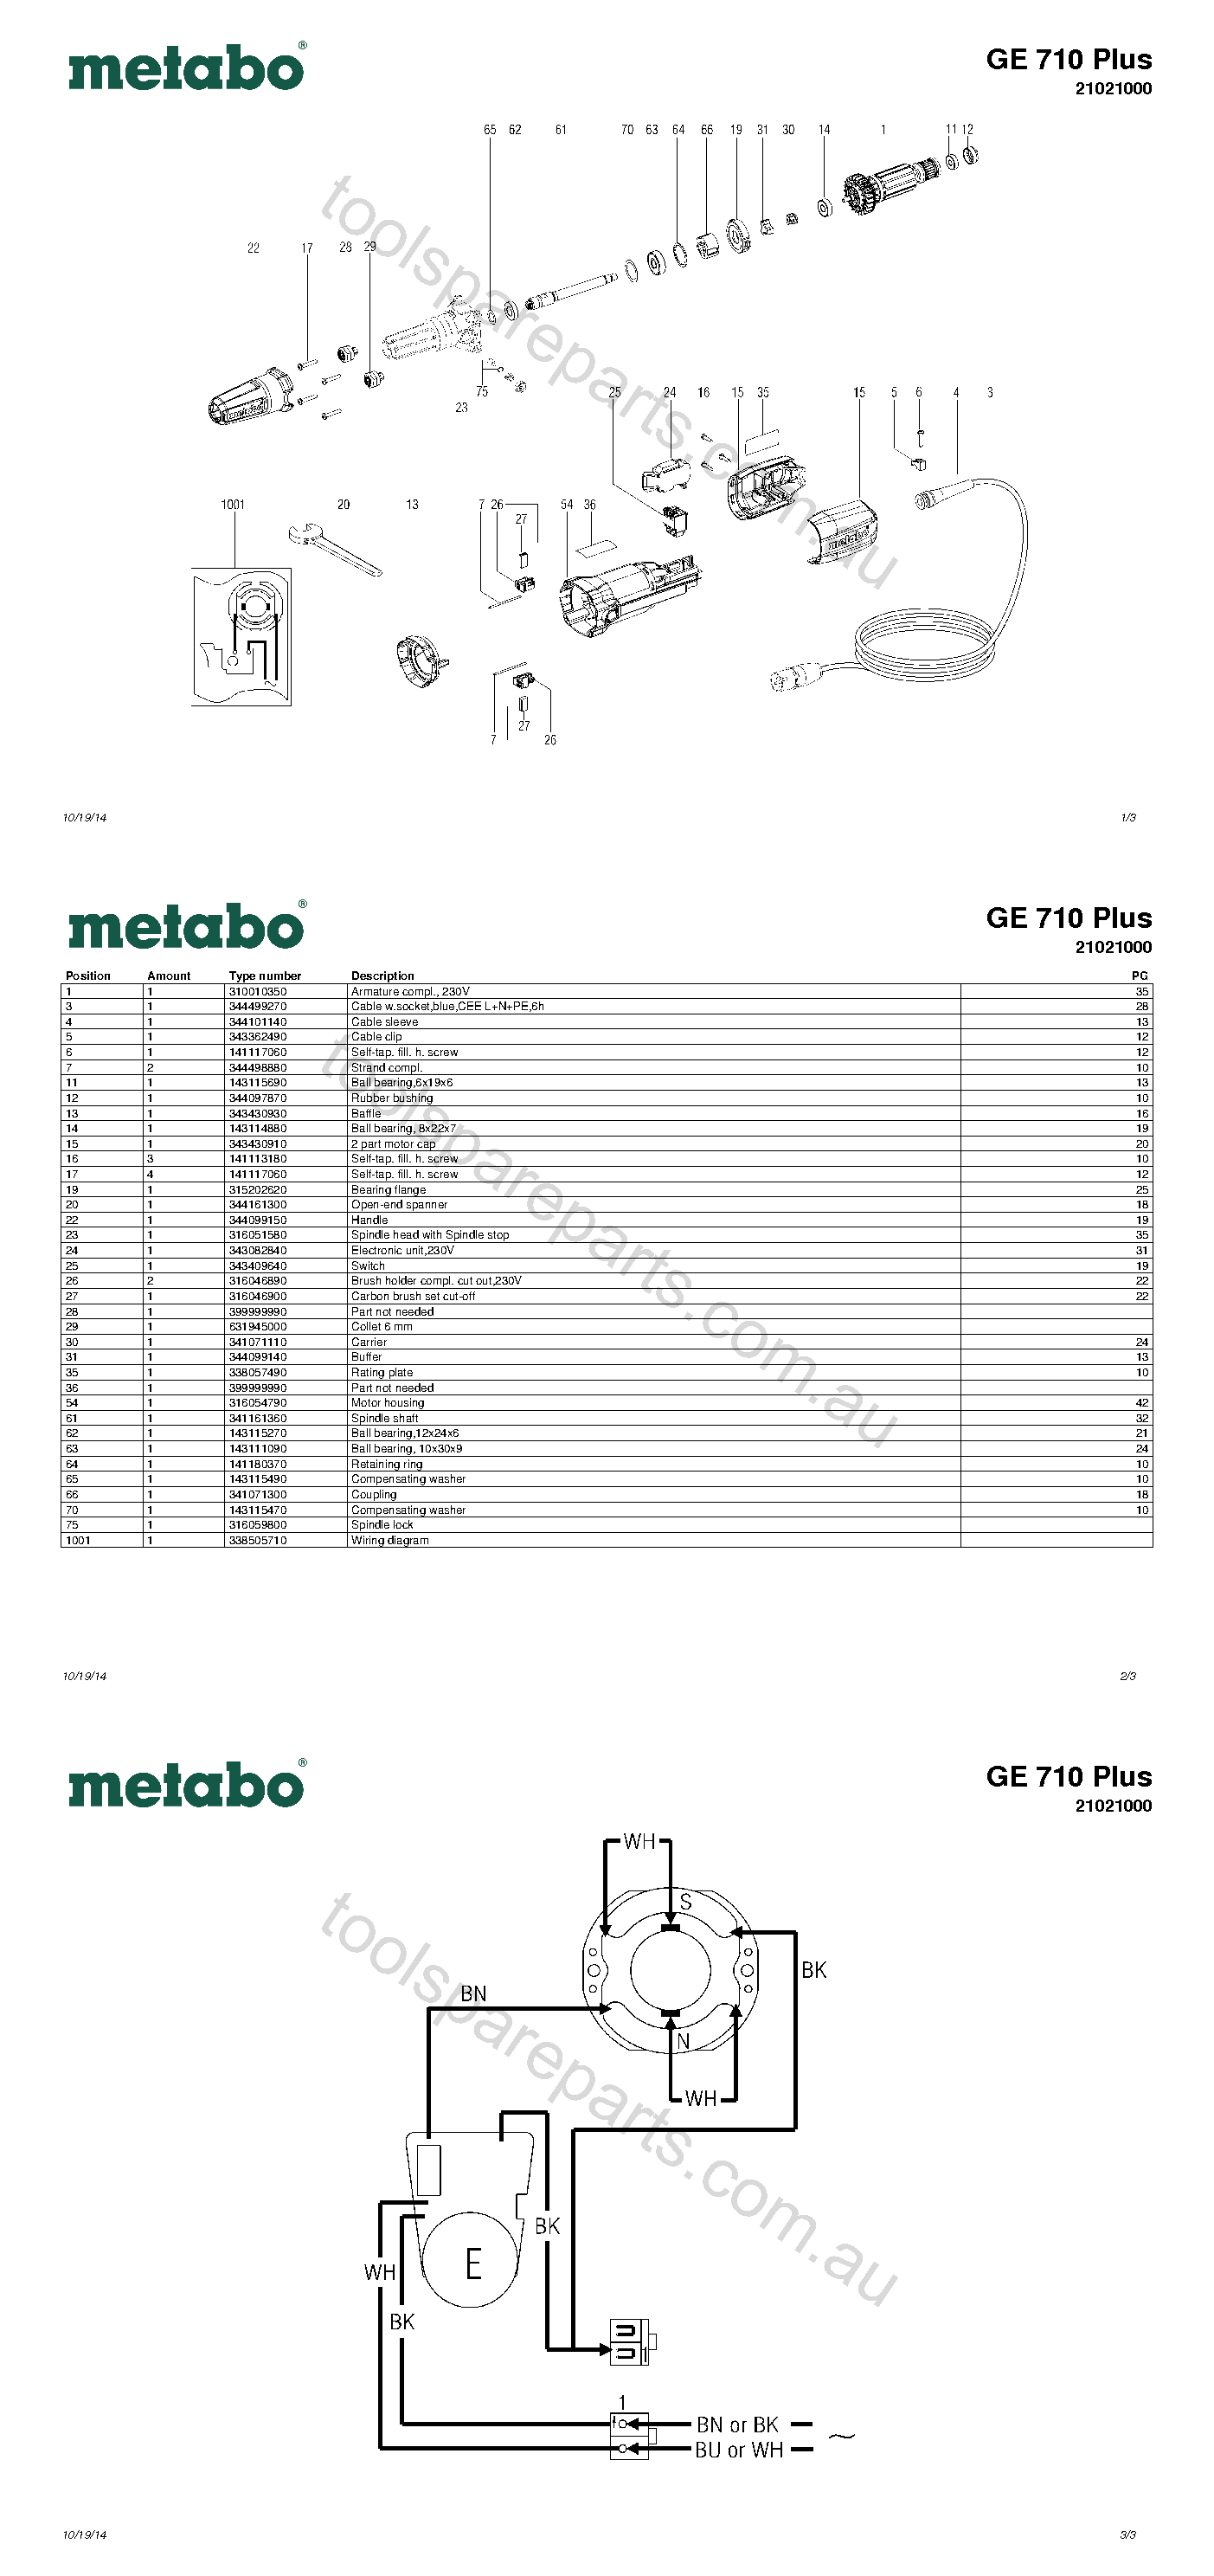 Metabo GE 710 Plus 21021000  Diagram 1